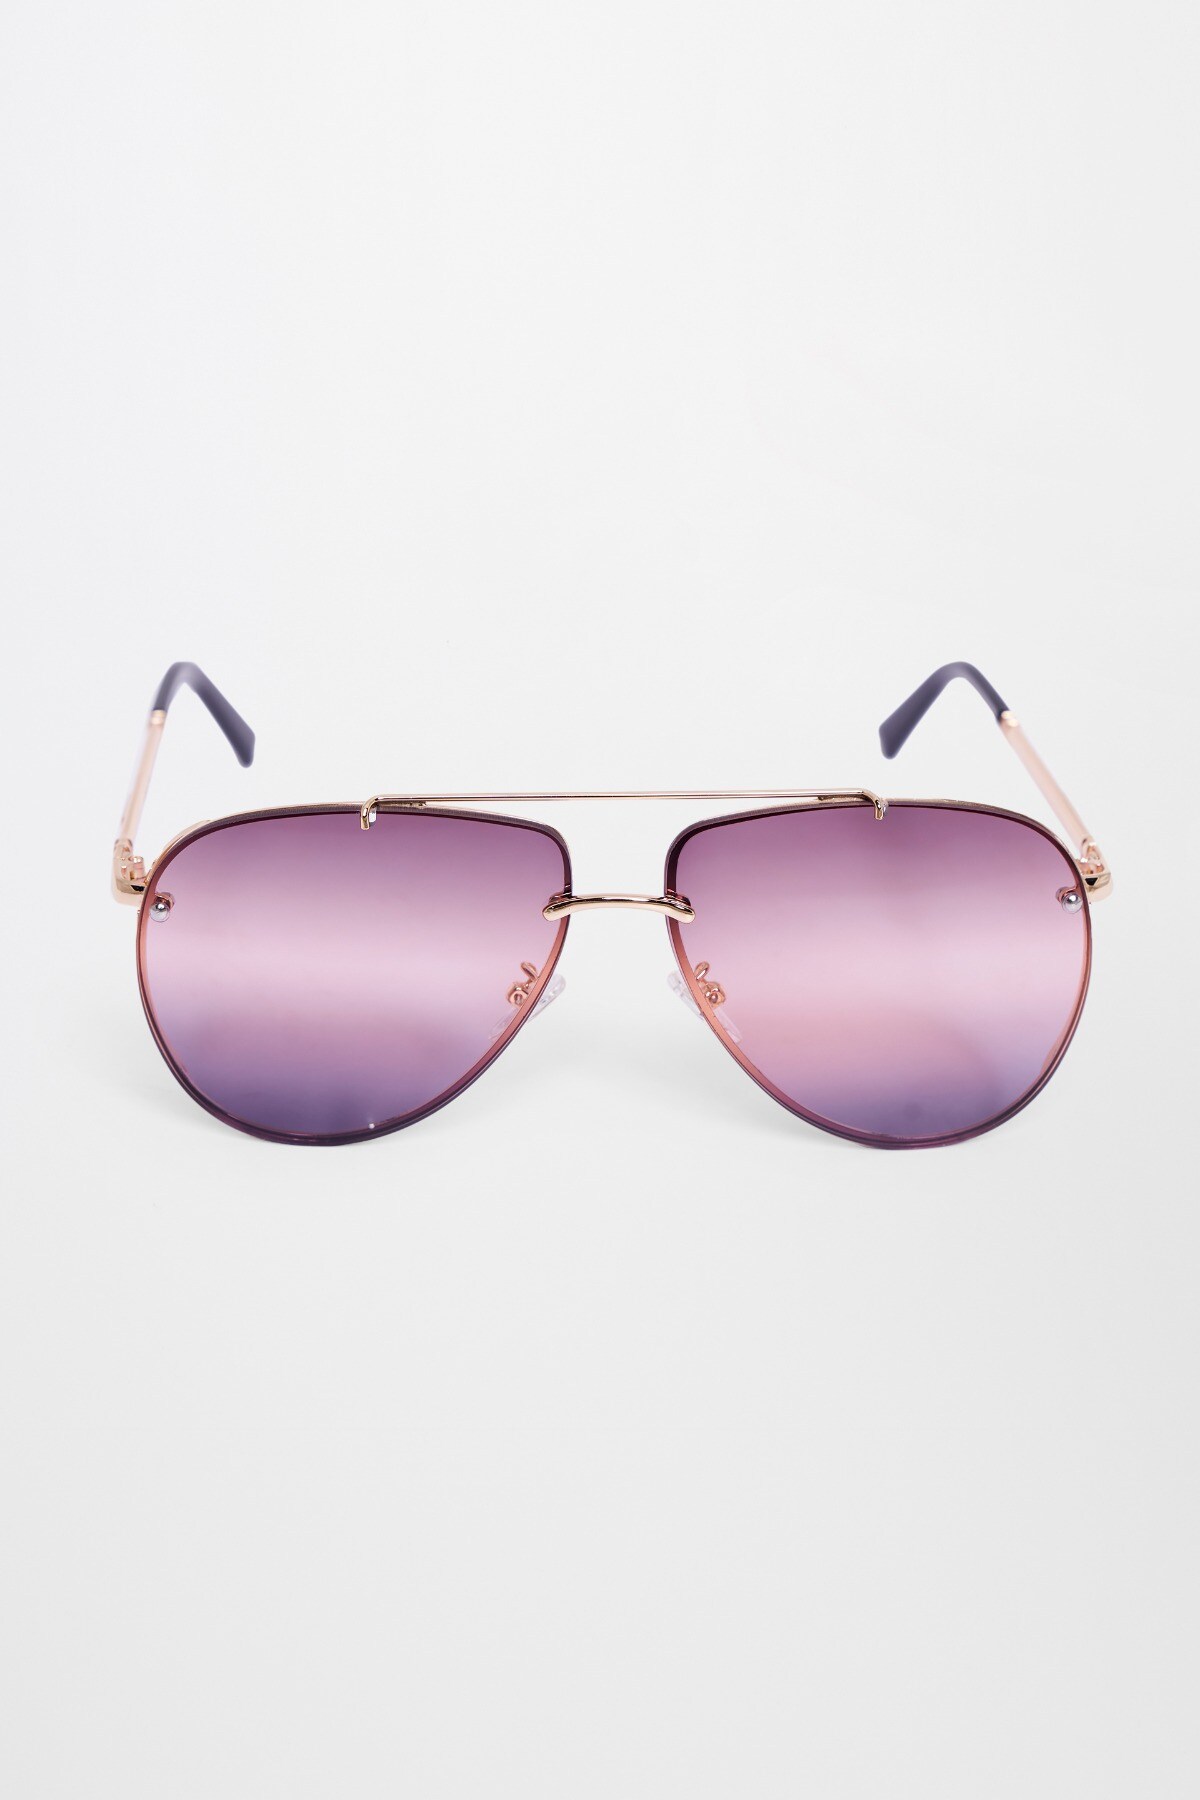 2 - Pink Sunglasses, image 2